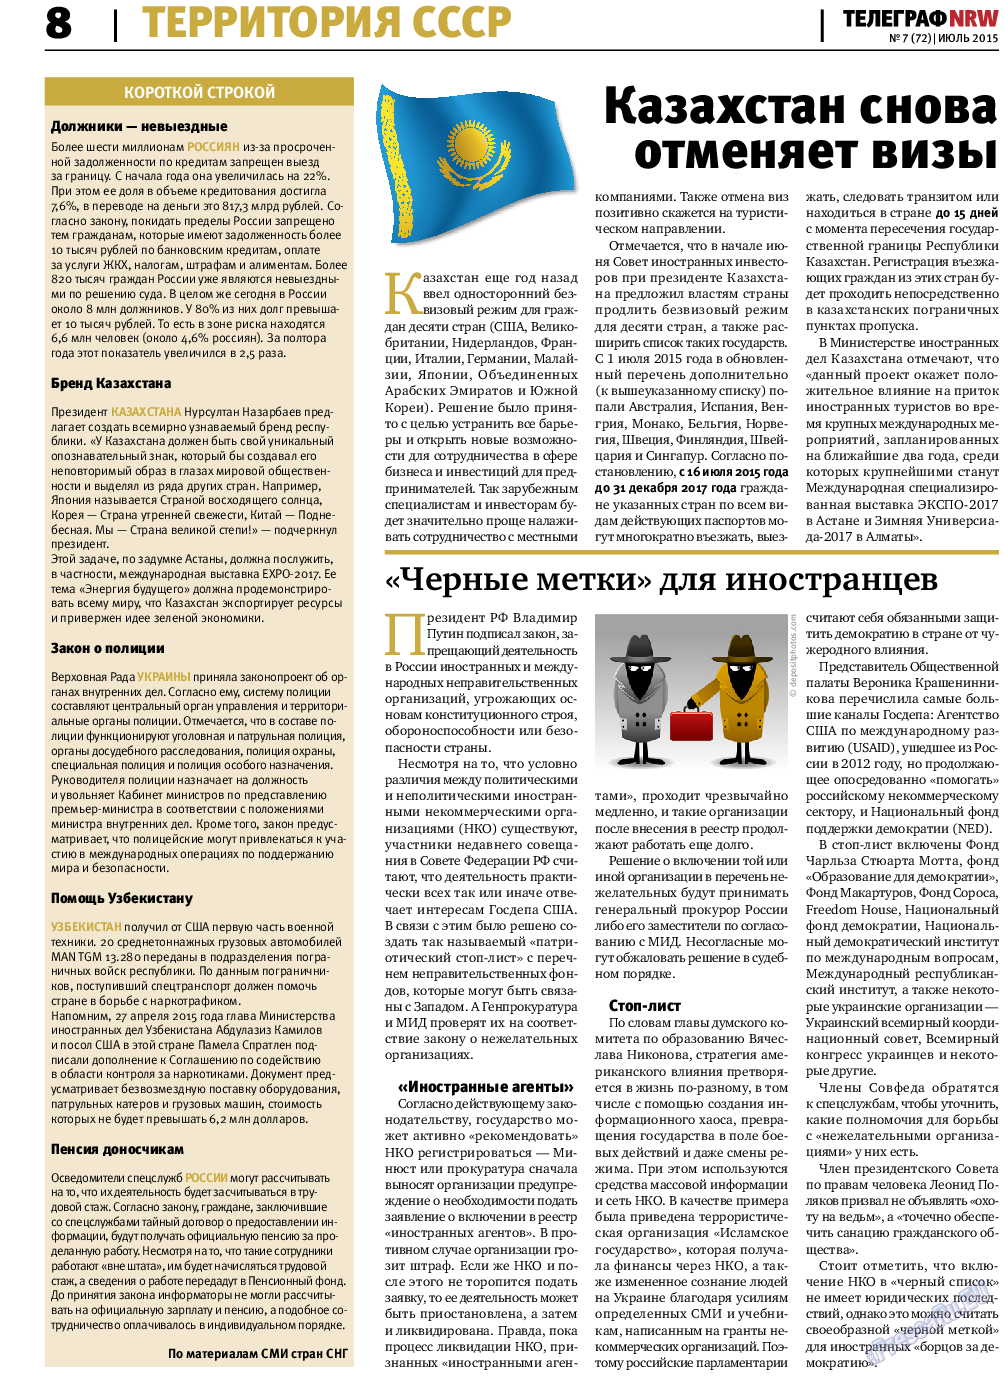 Телеграф NRW, газета. 2015 №7 стр.8